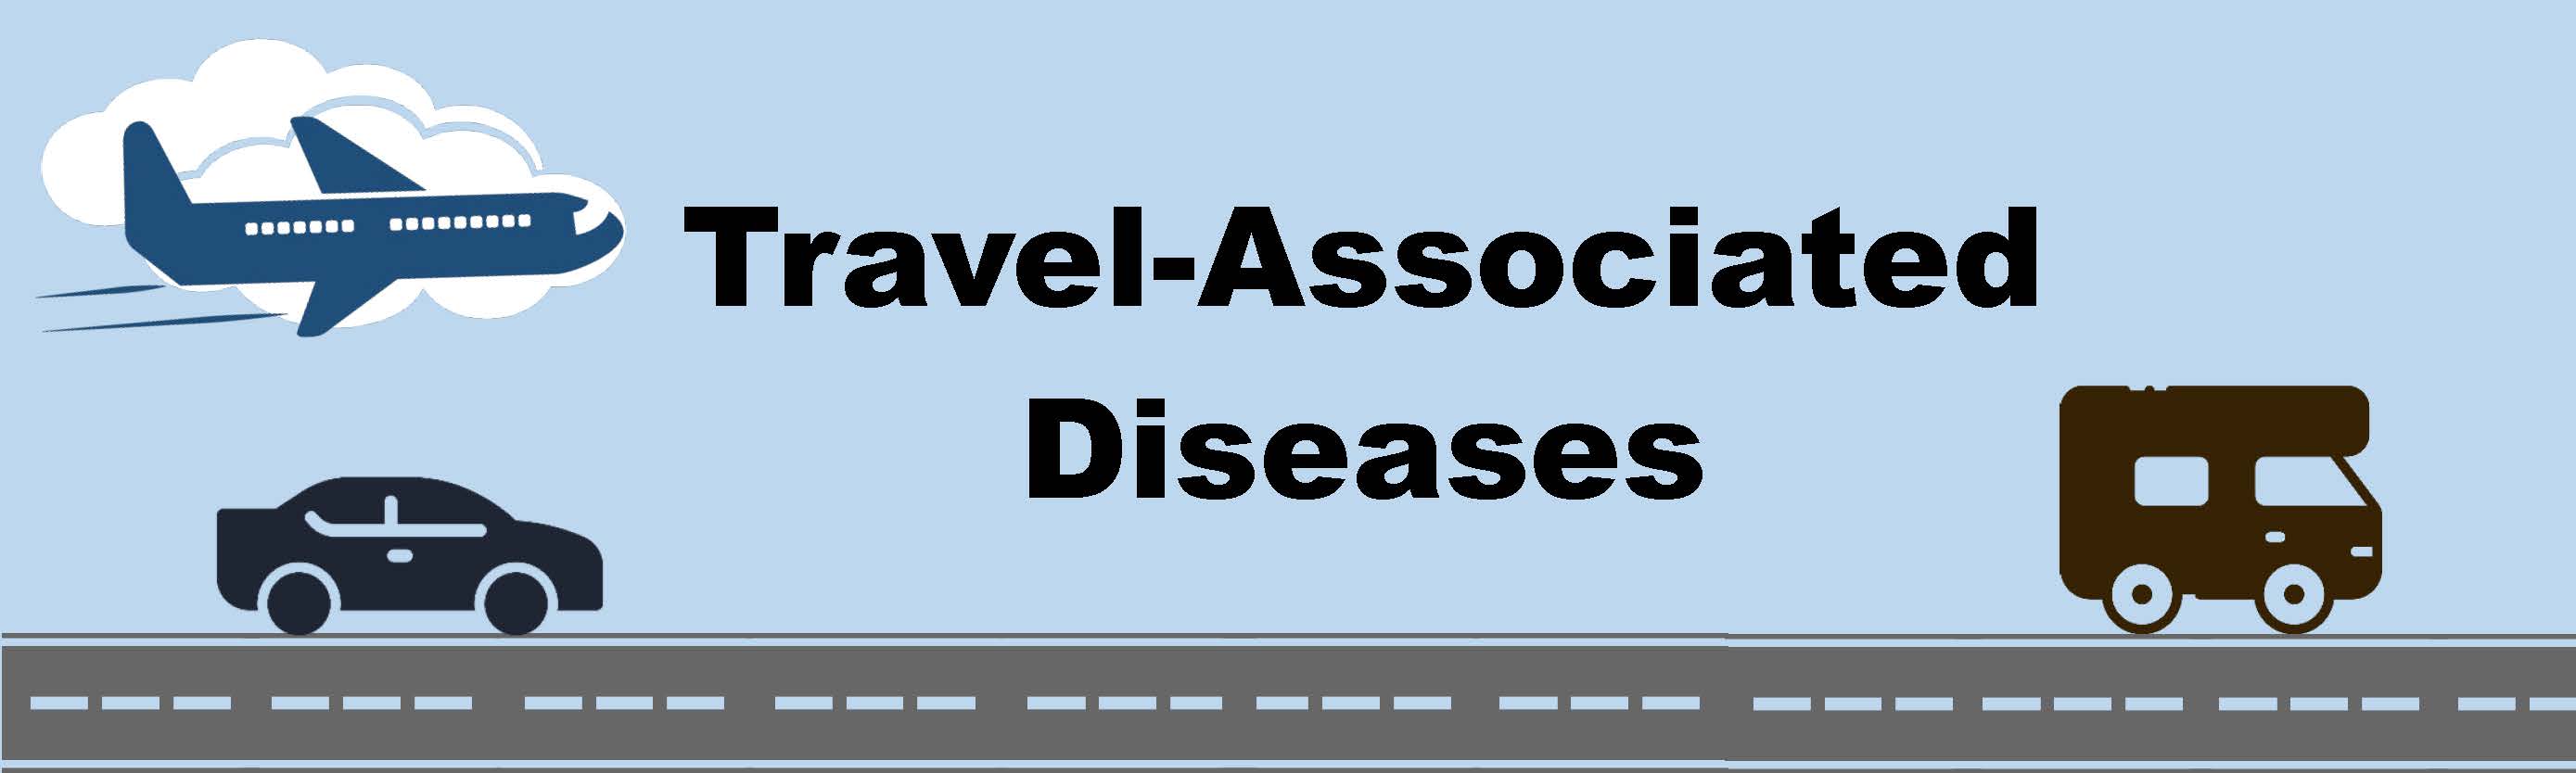 Travel Associated Diseases